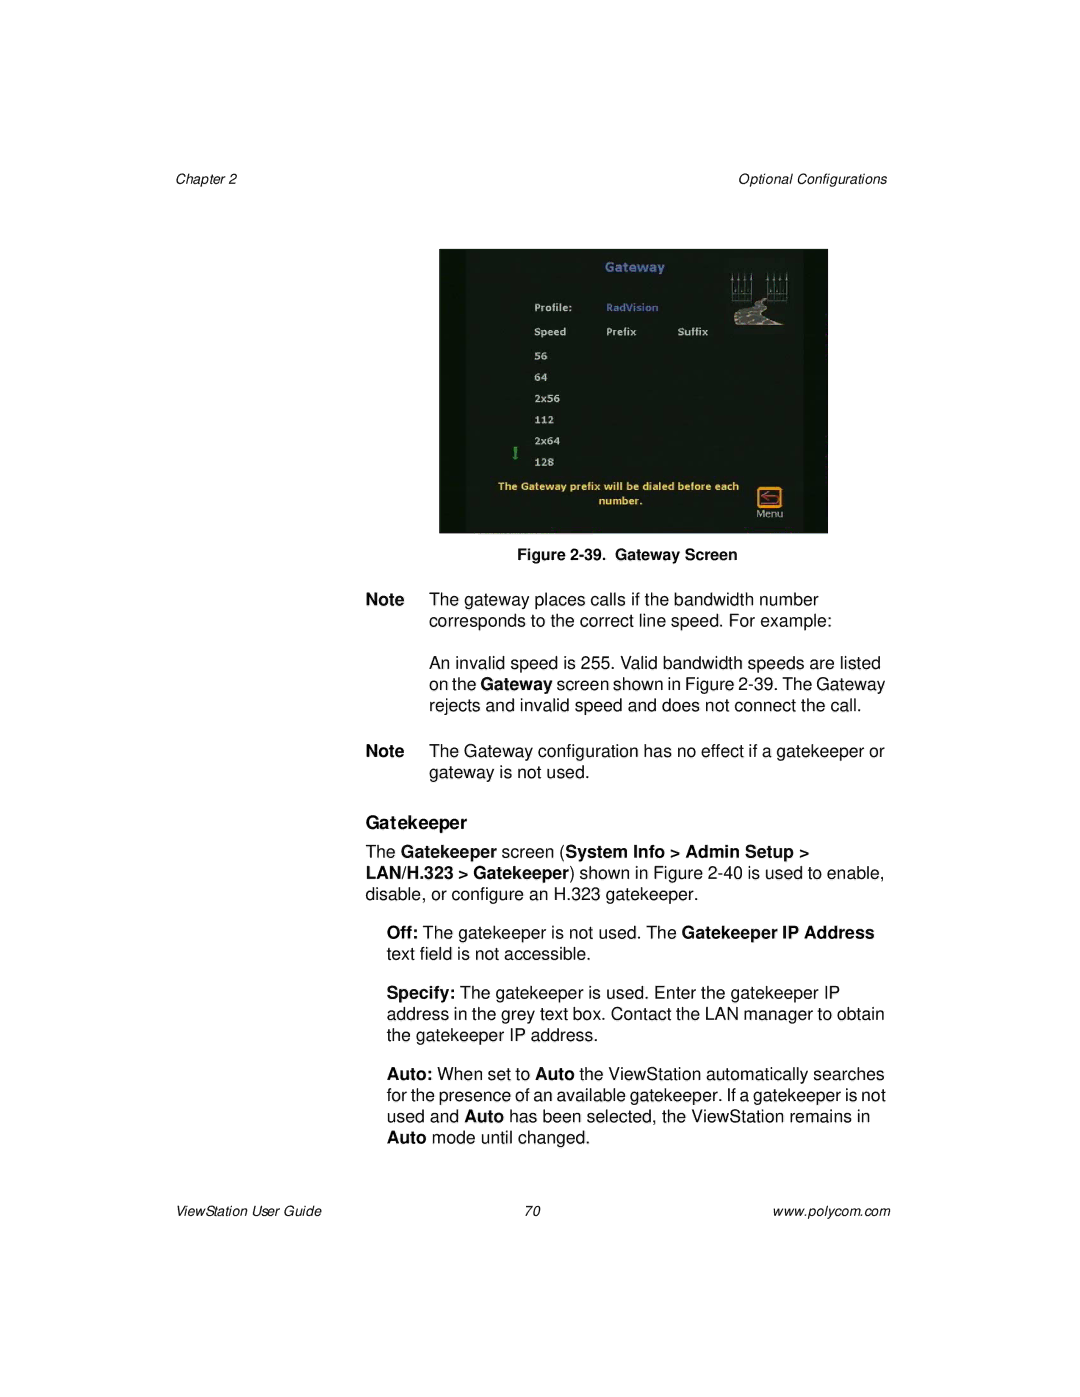 Polycom ViewStation manual Gatekeeper, Gateway Screen 